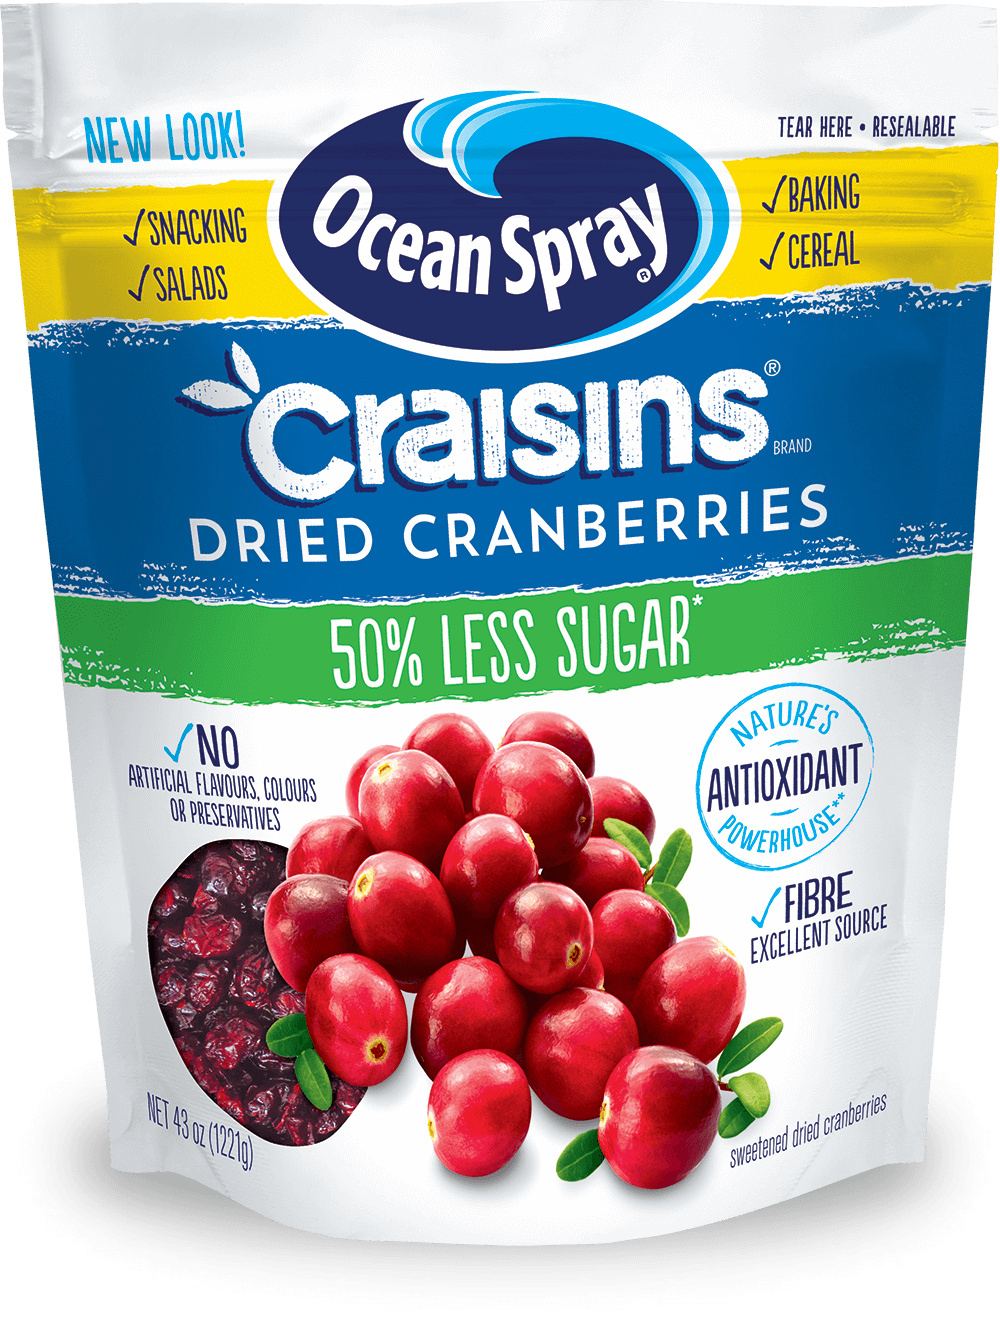 Reduced Sugar Craisins® Dried Cranberries